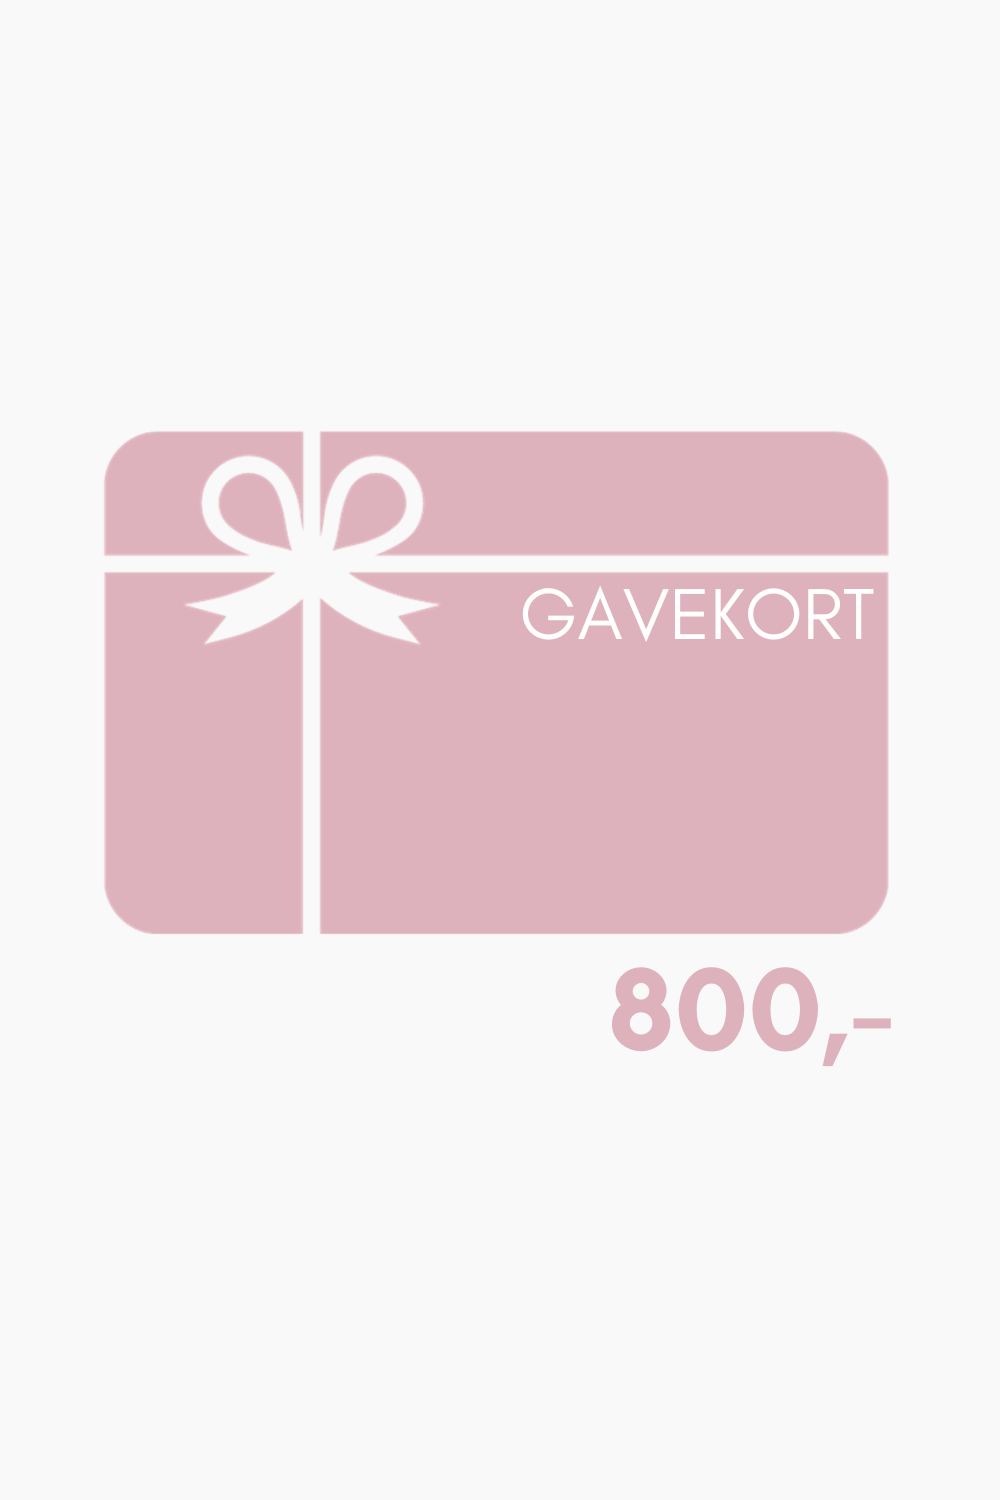 QNTS Gavekort 800 kr